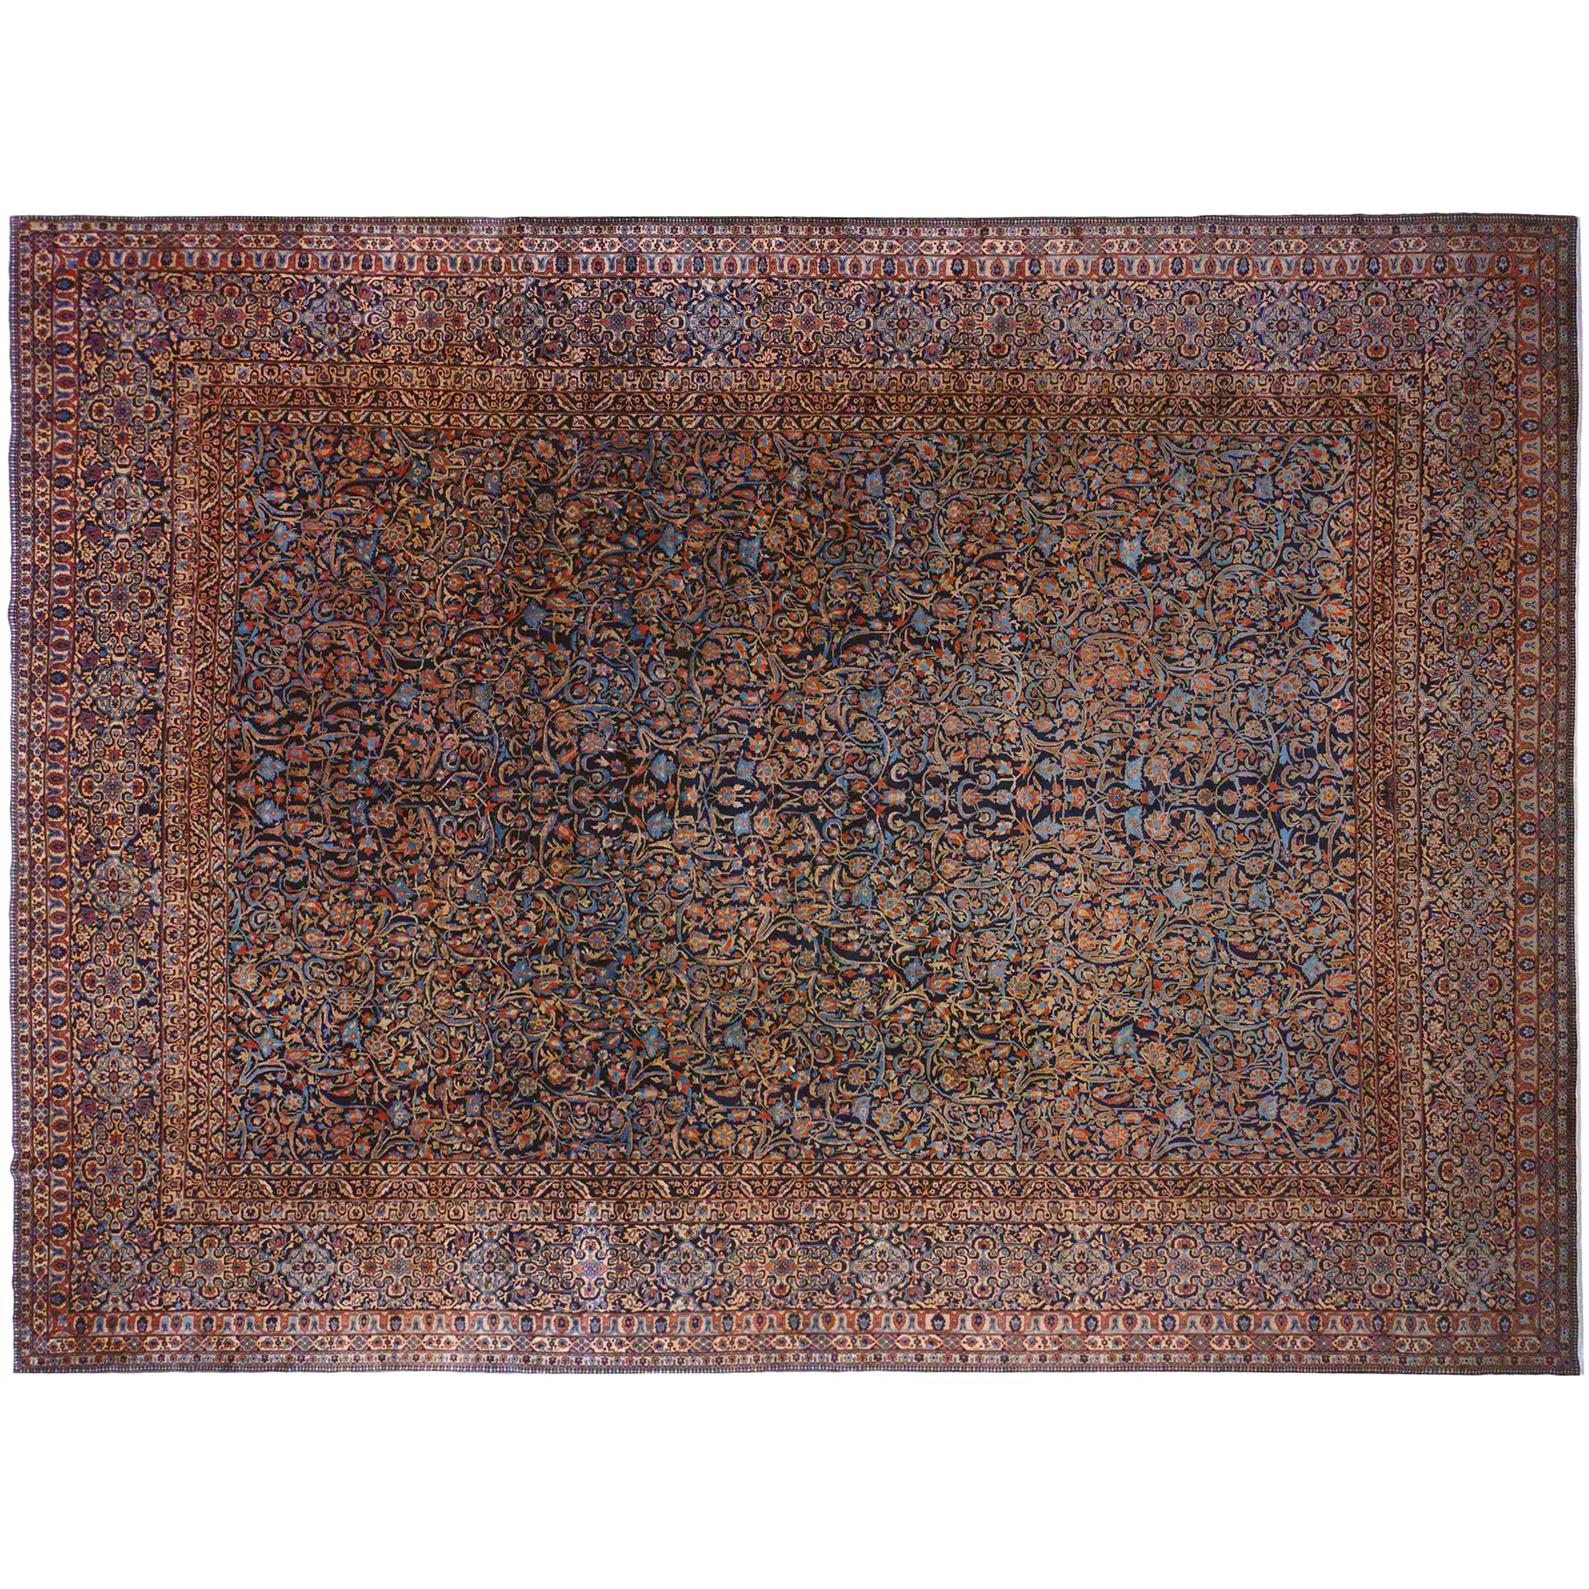 Antique Persian Mohtesham Kashan Oriental Carpet, Large Size, with Weaver's Mark